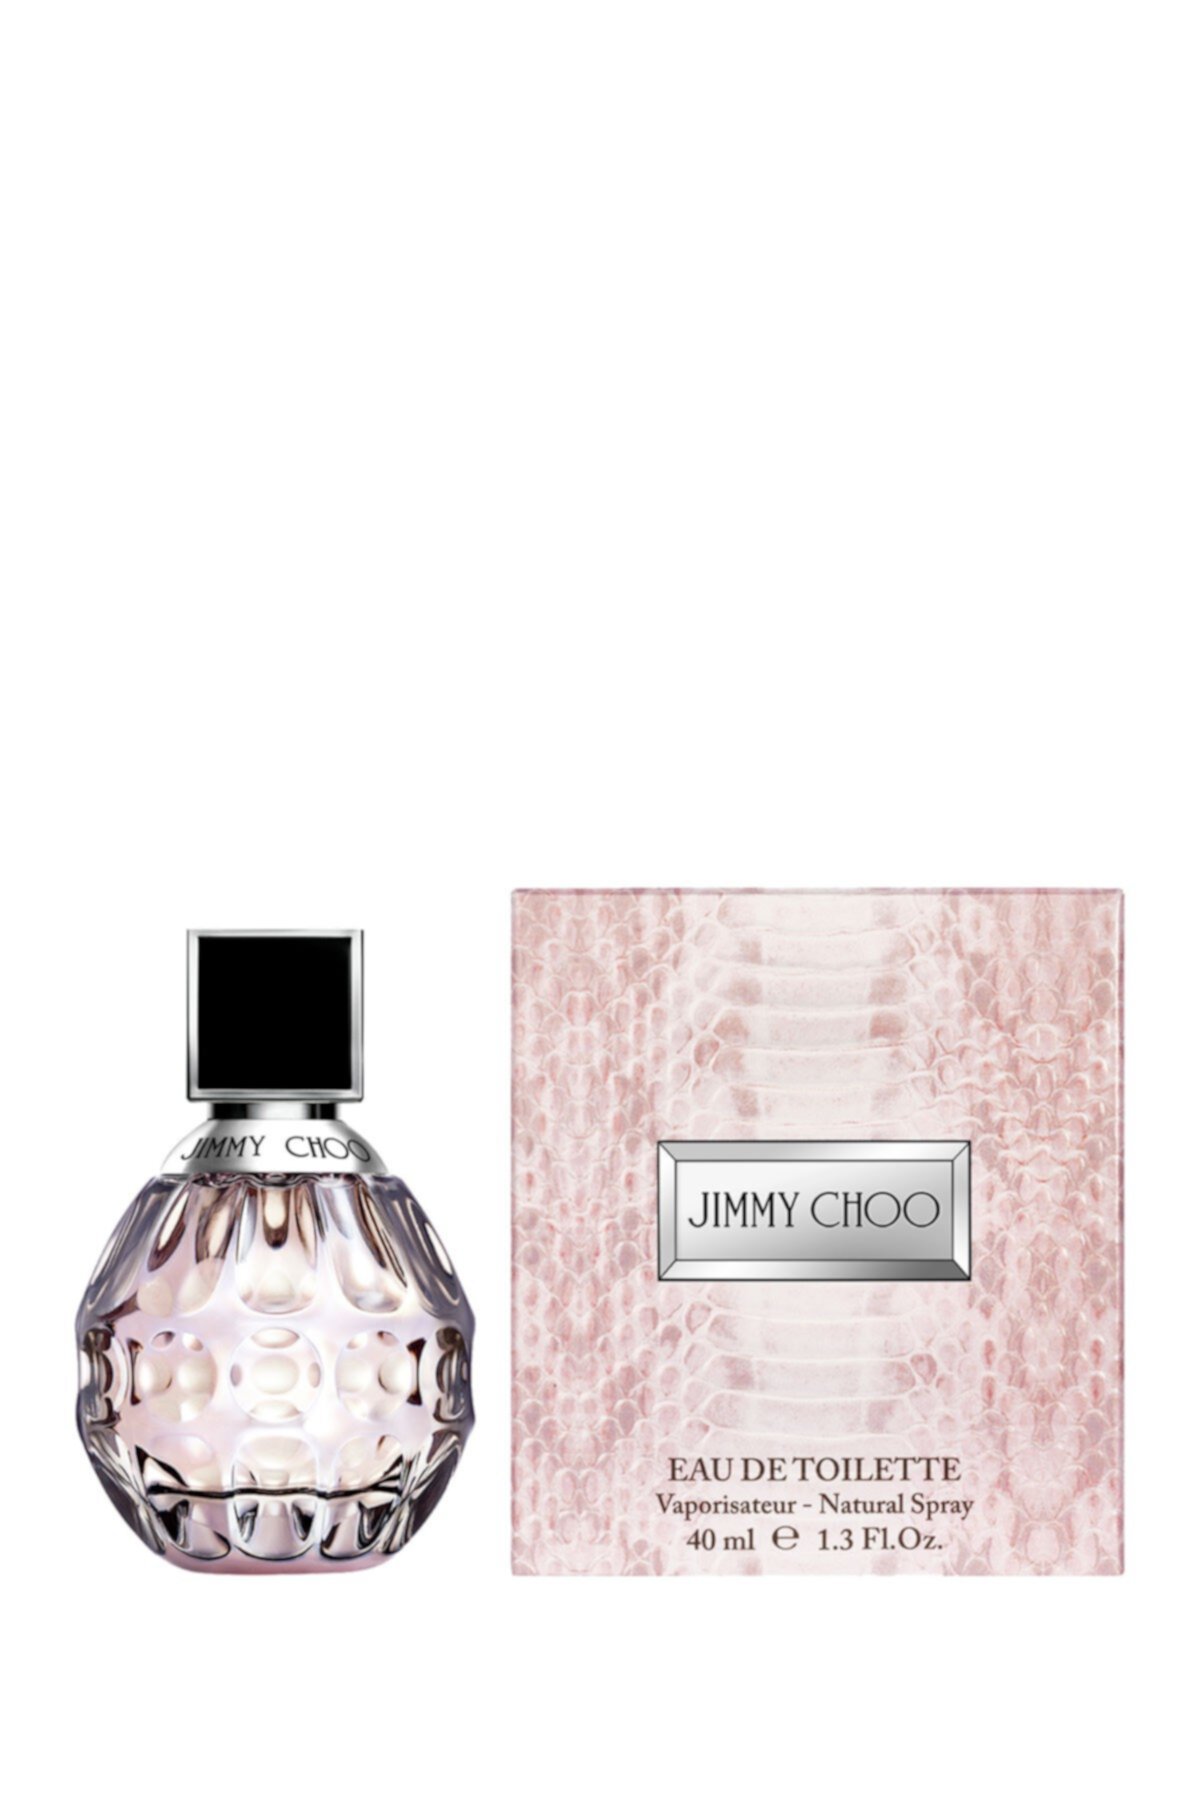 Jimmy Choo Eau de Toilette. Jimmy Choo 40 мл. Jimmy Choo Perfume natural Spray Парфюм. Jimmy Choo Fever.